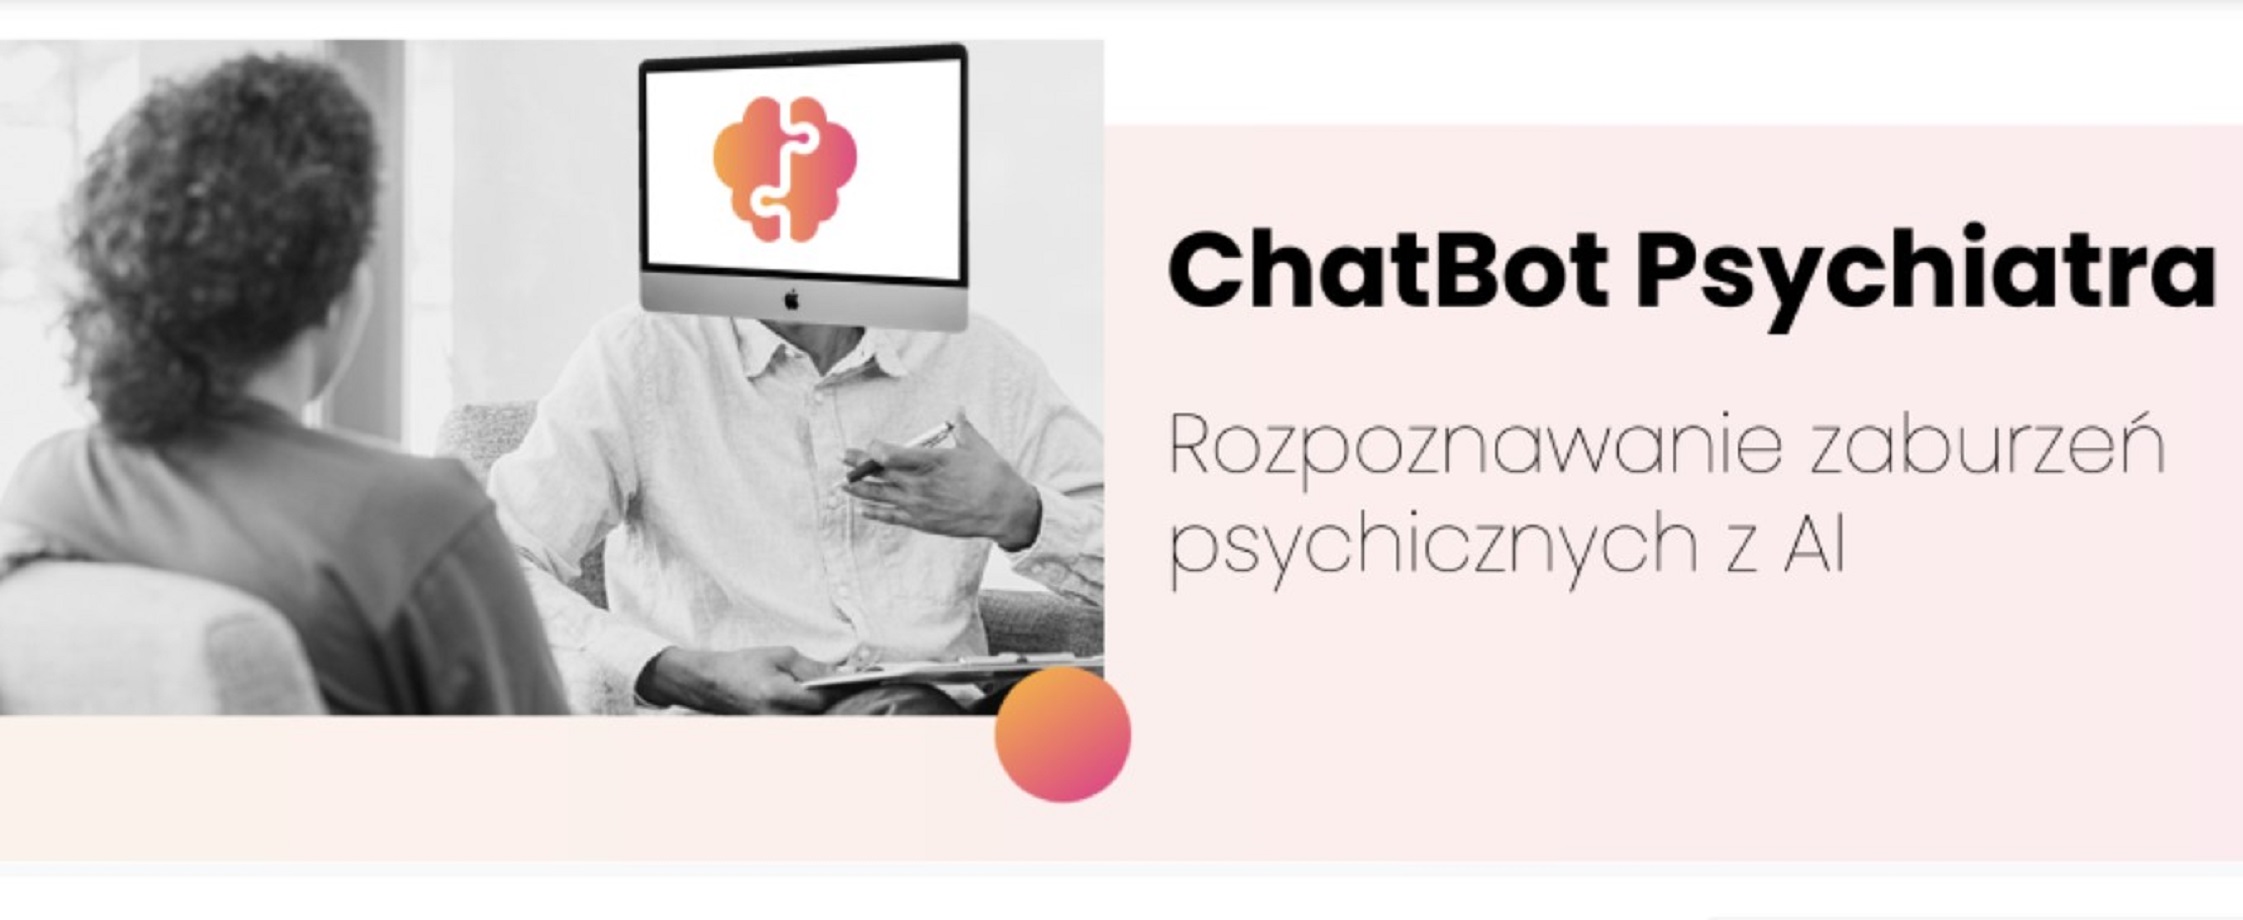 chatbot psychiatra (źródło: mindmatch.pl)